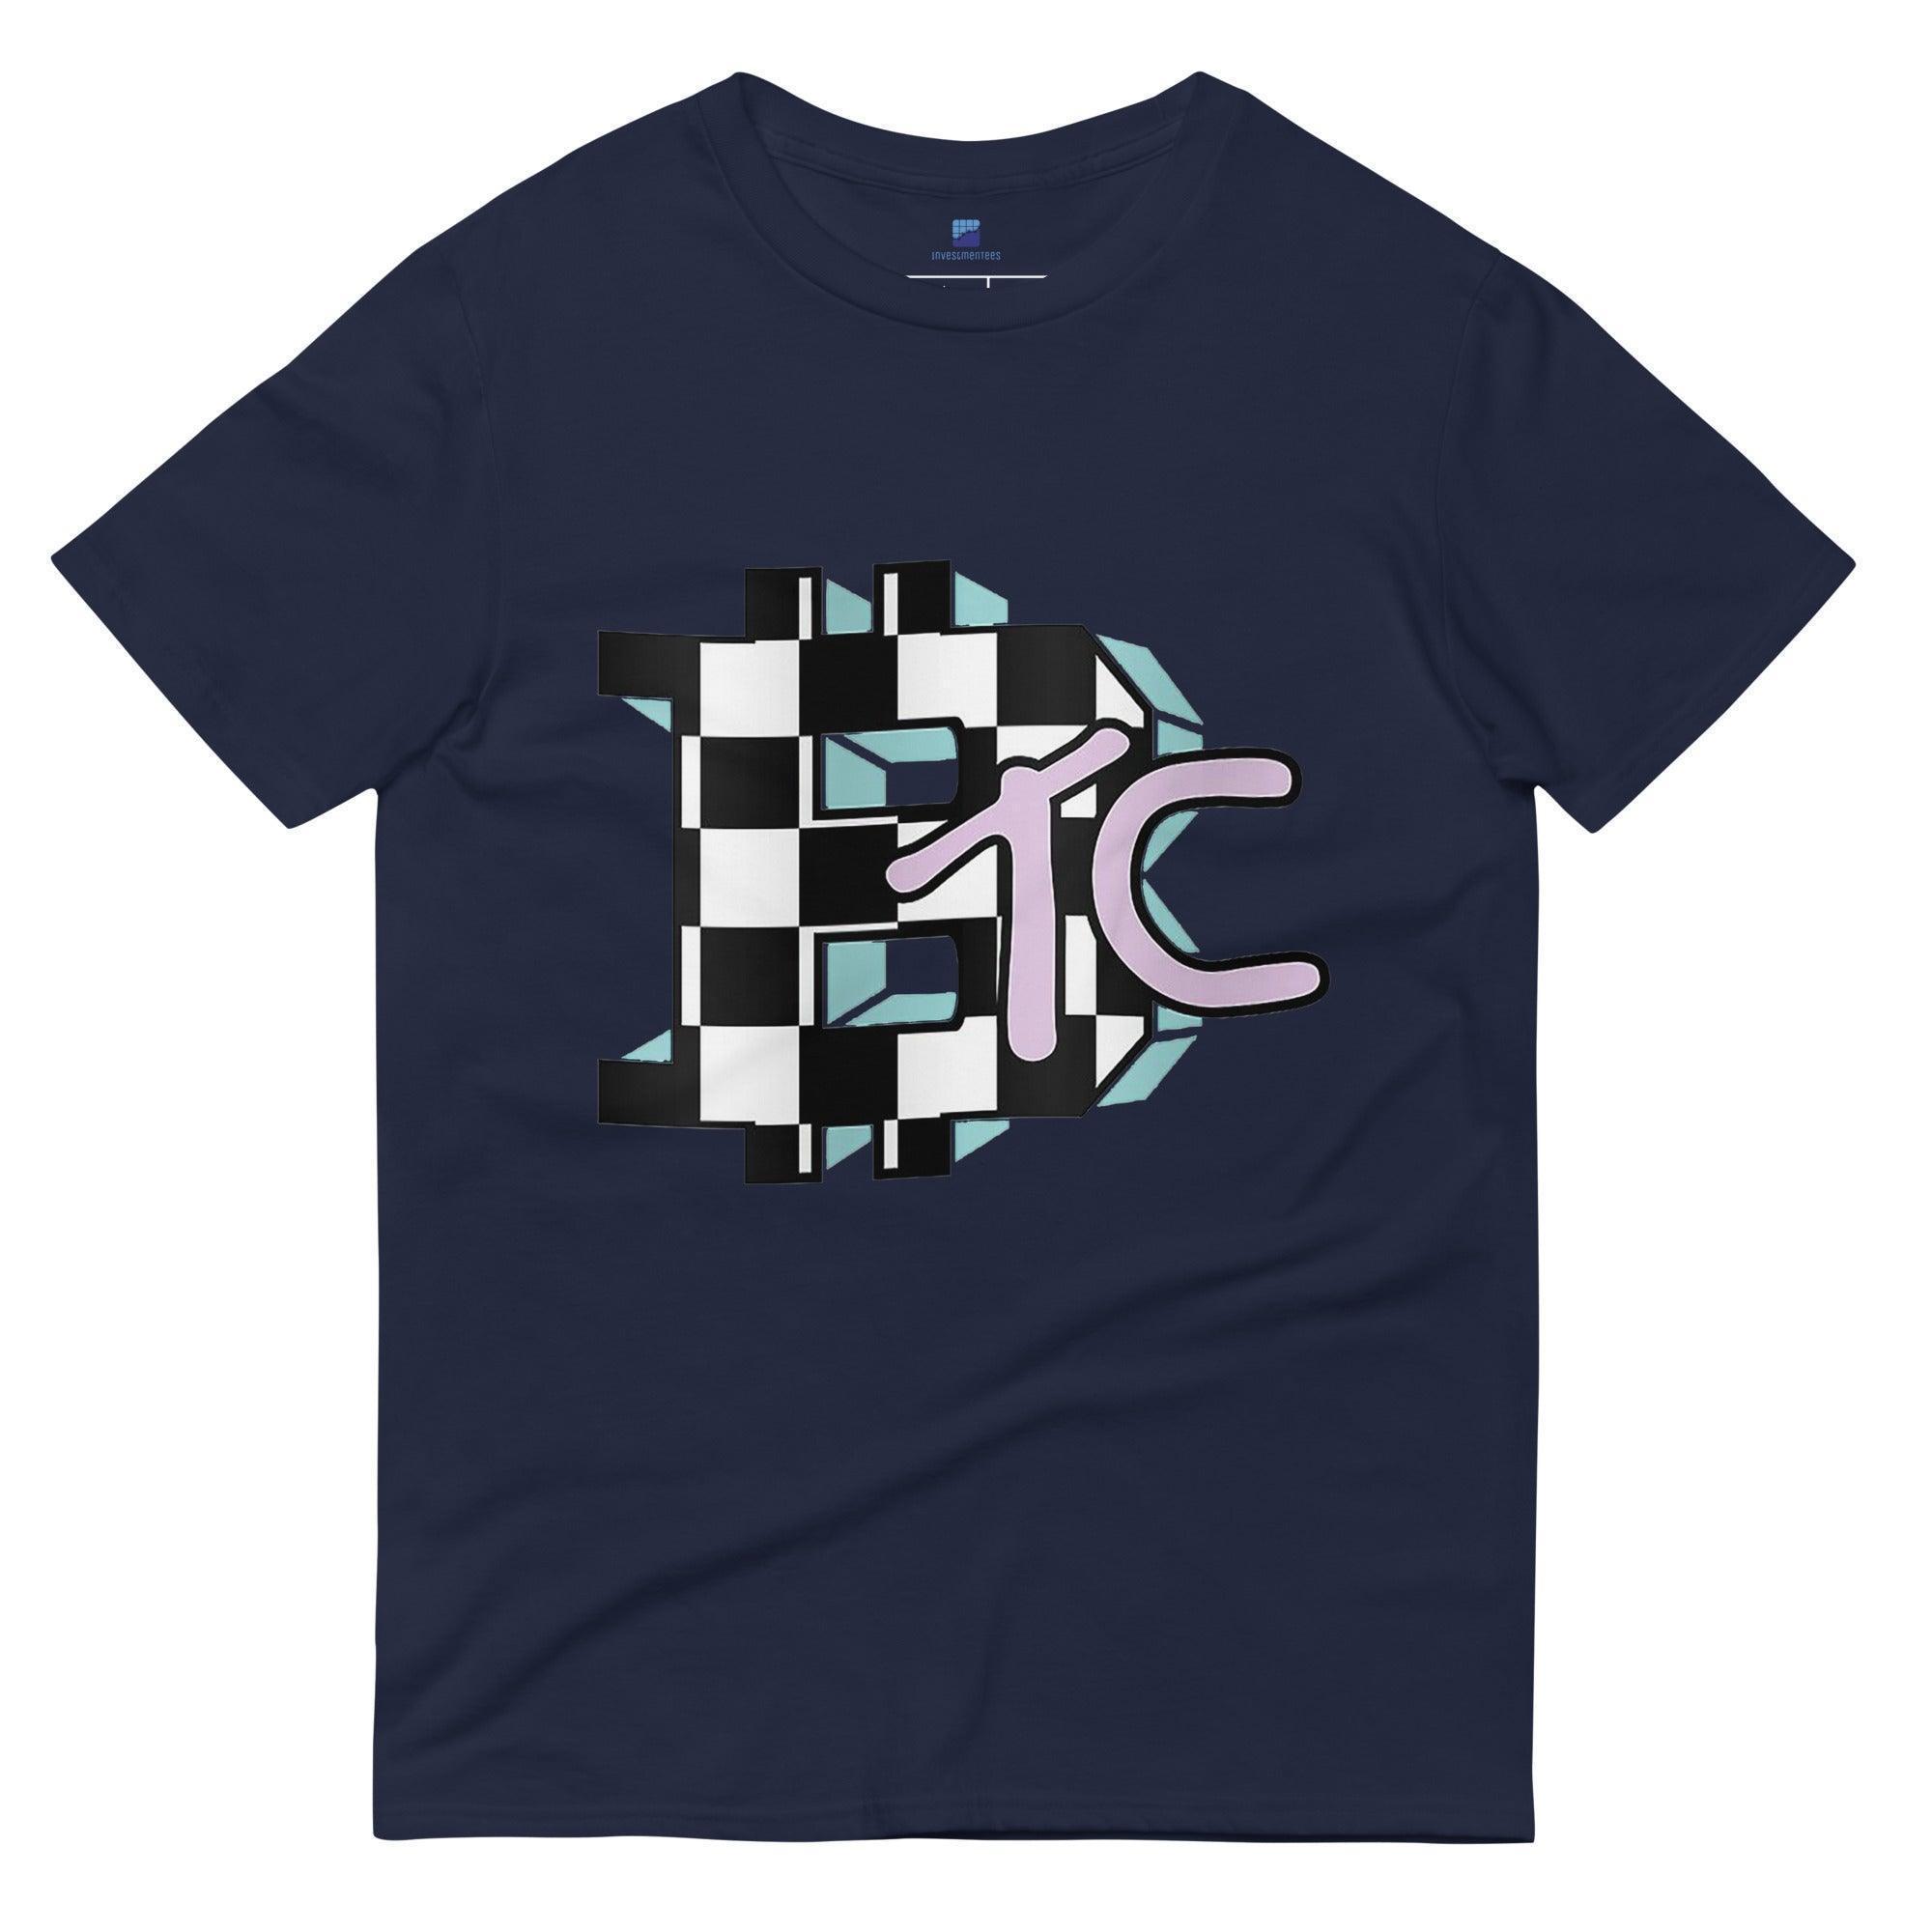 BTC Art T-Shirt - InvestmenTees